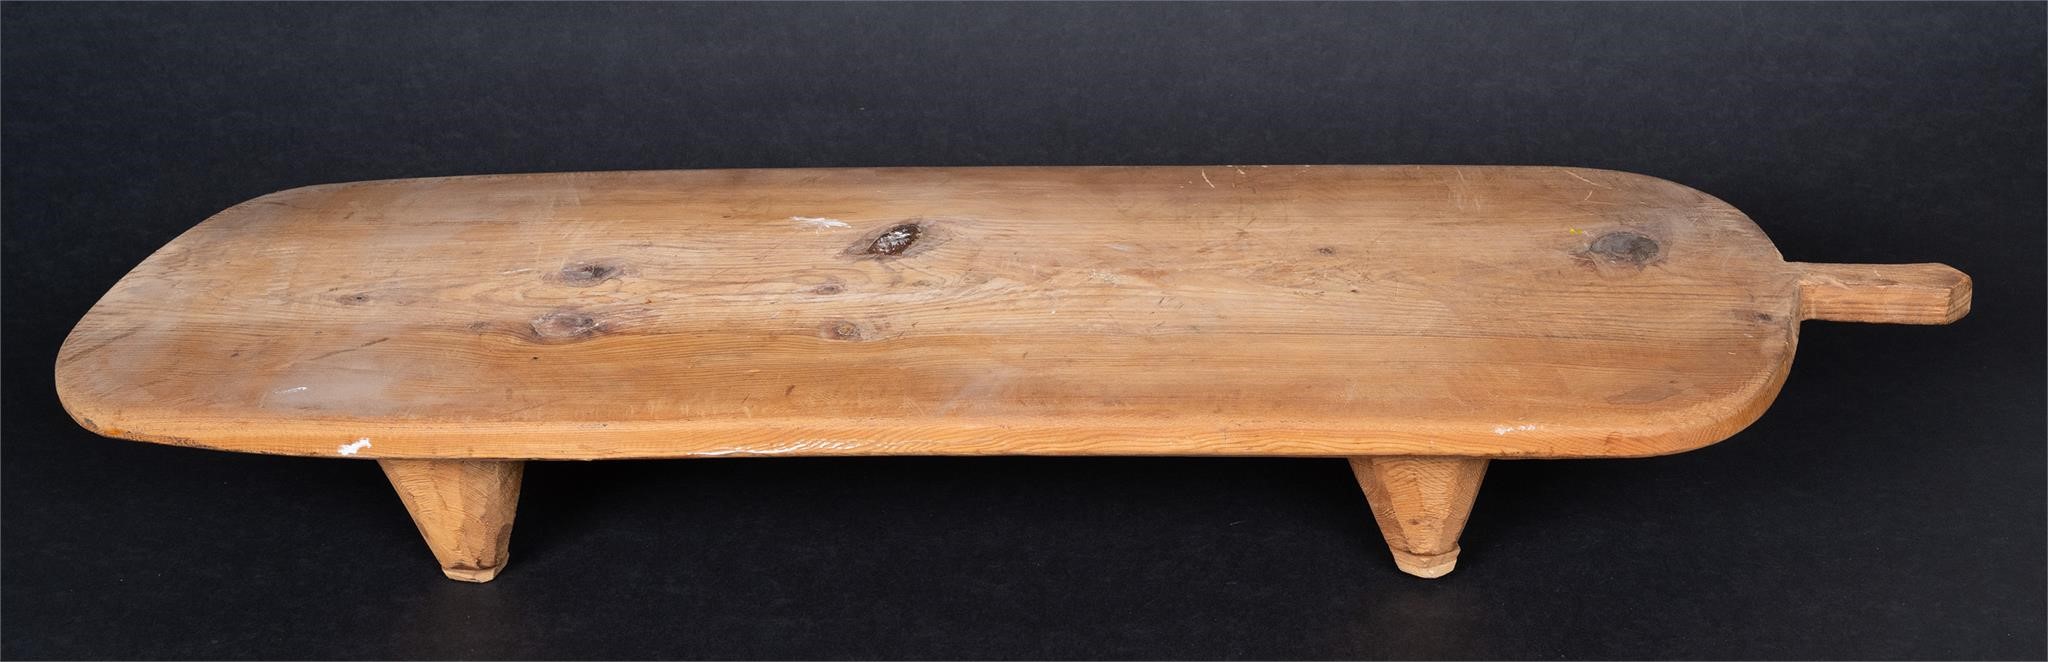 Paul Jenkins Studio Wood Work Bench Found Object